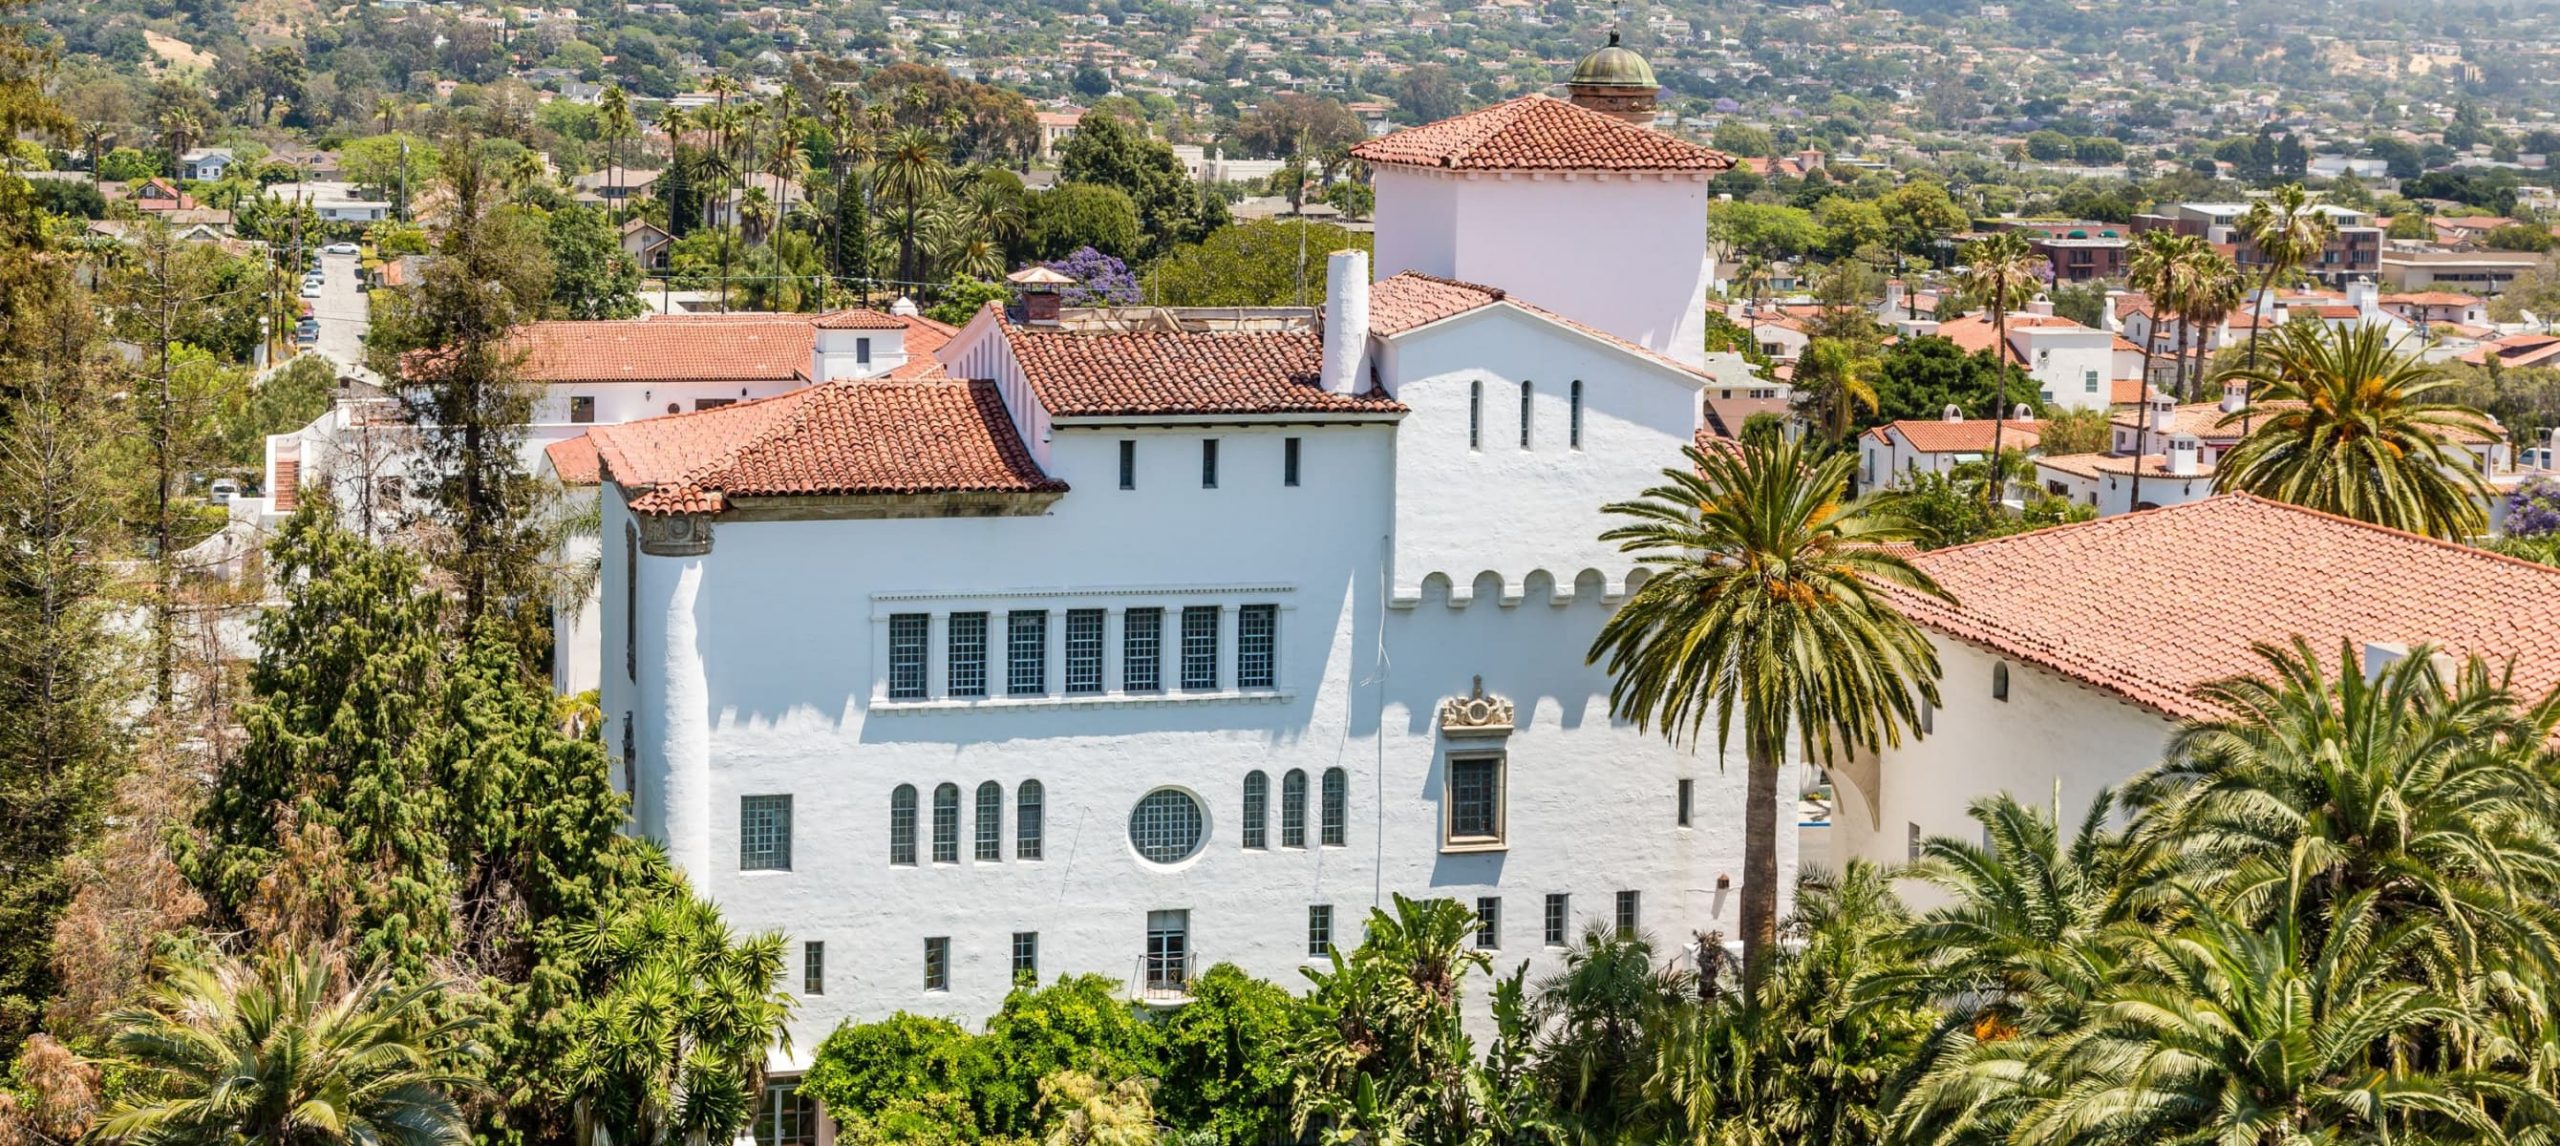 The 5 Best Hotels in Santa Barbara, California